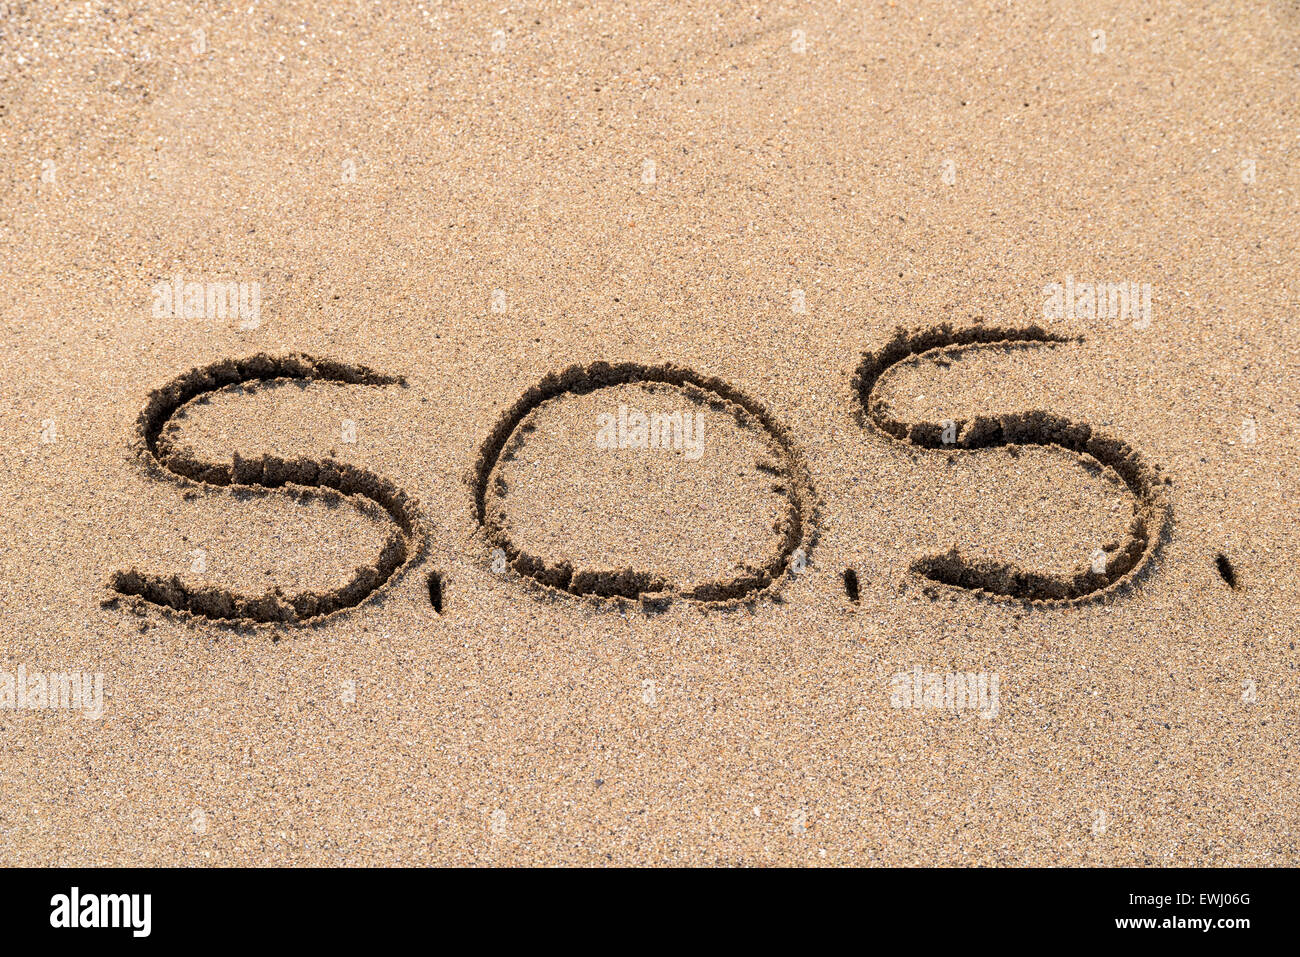 S o s лайк. Надпись на песке. Надпись на песке фон. Надпись сос на песке. Надпись сигнал сос.